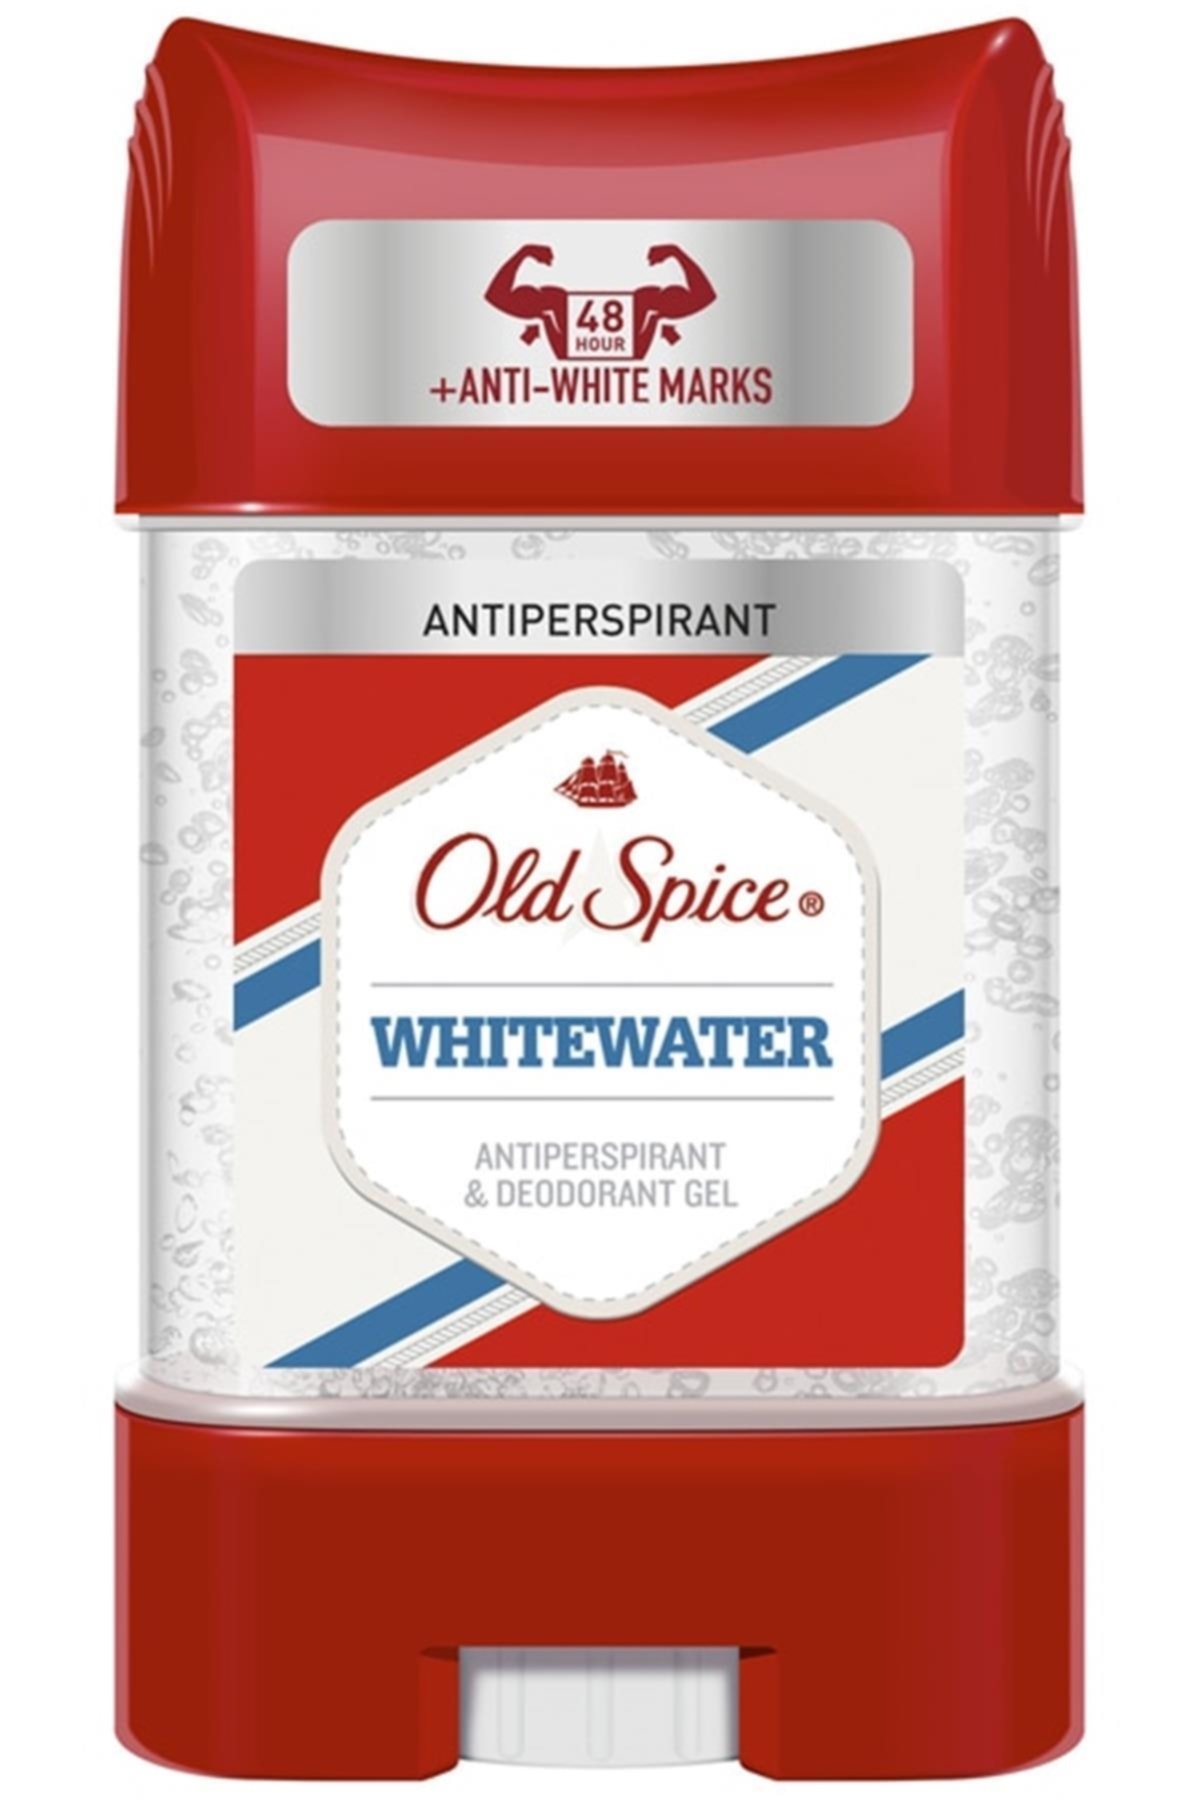 Old Spice Whitewater Clear Erkek Deodorant Stick Jel 70ml